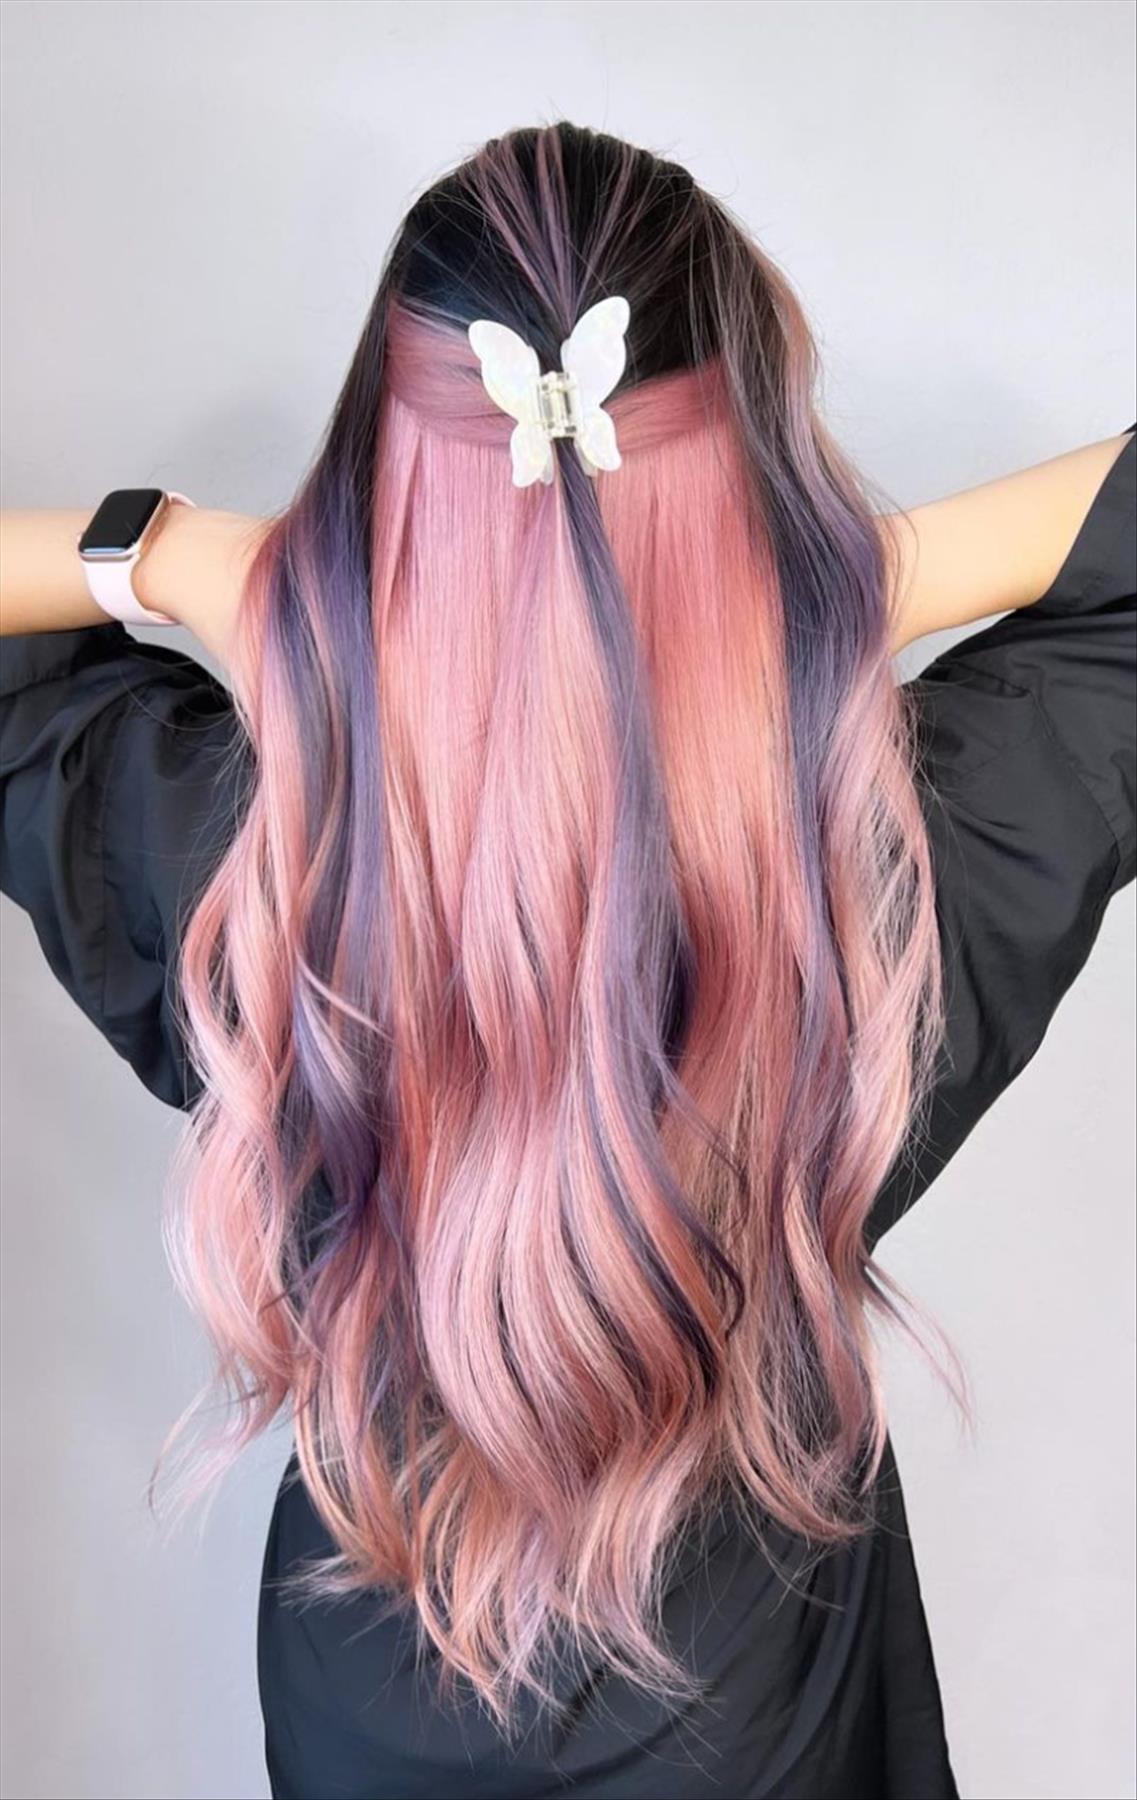 Cool Two-Tone Hair Colors For Fall Hair Dye Ideas